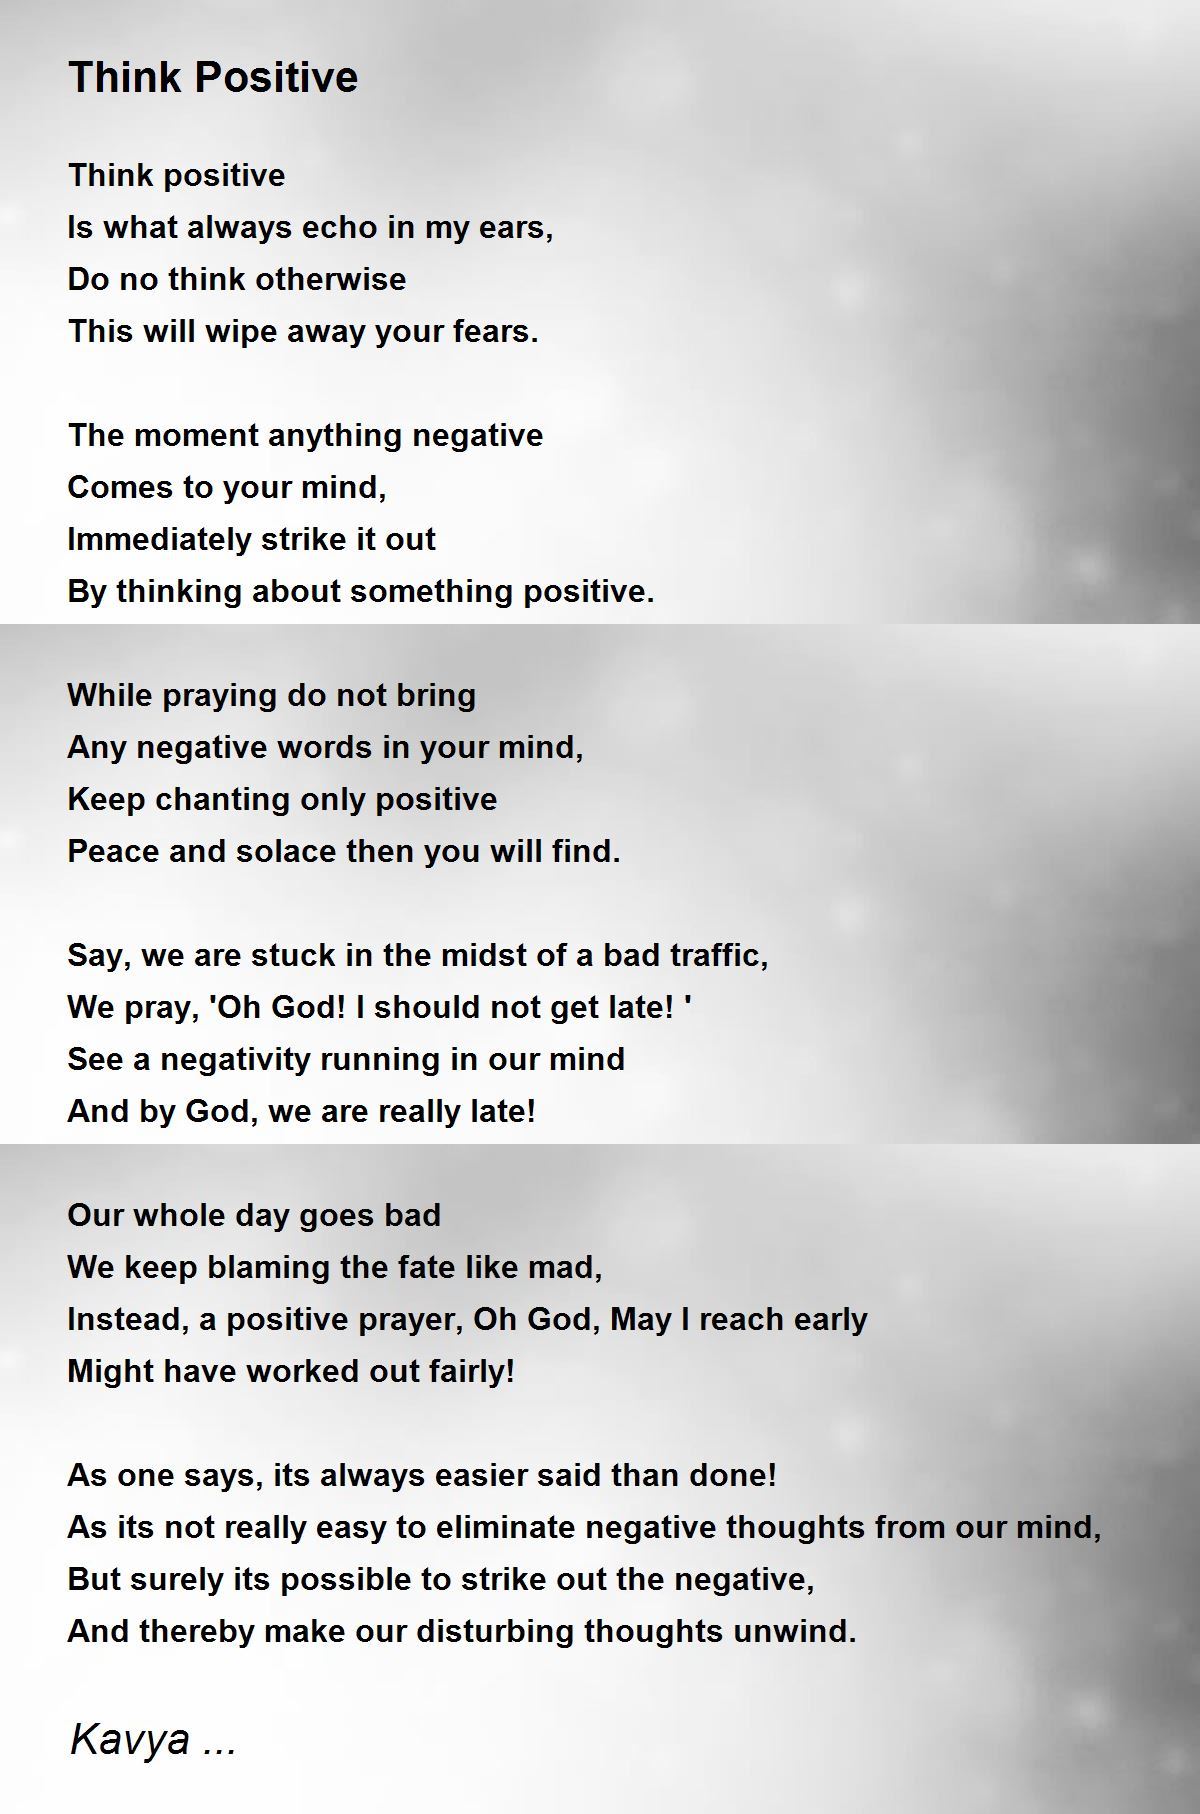 Think Positive Poem by Kavya - Poem Hunter